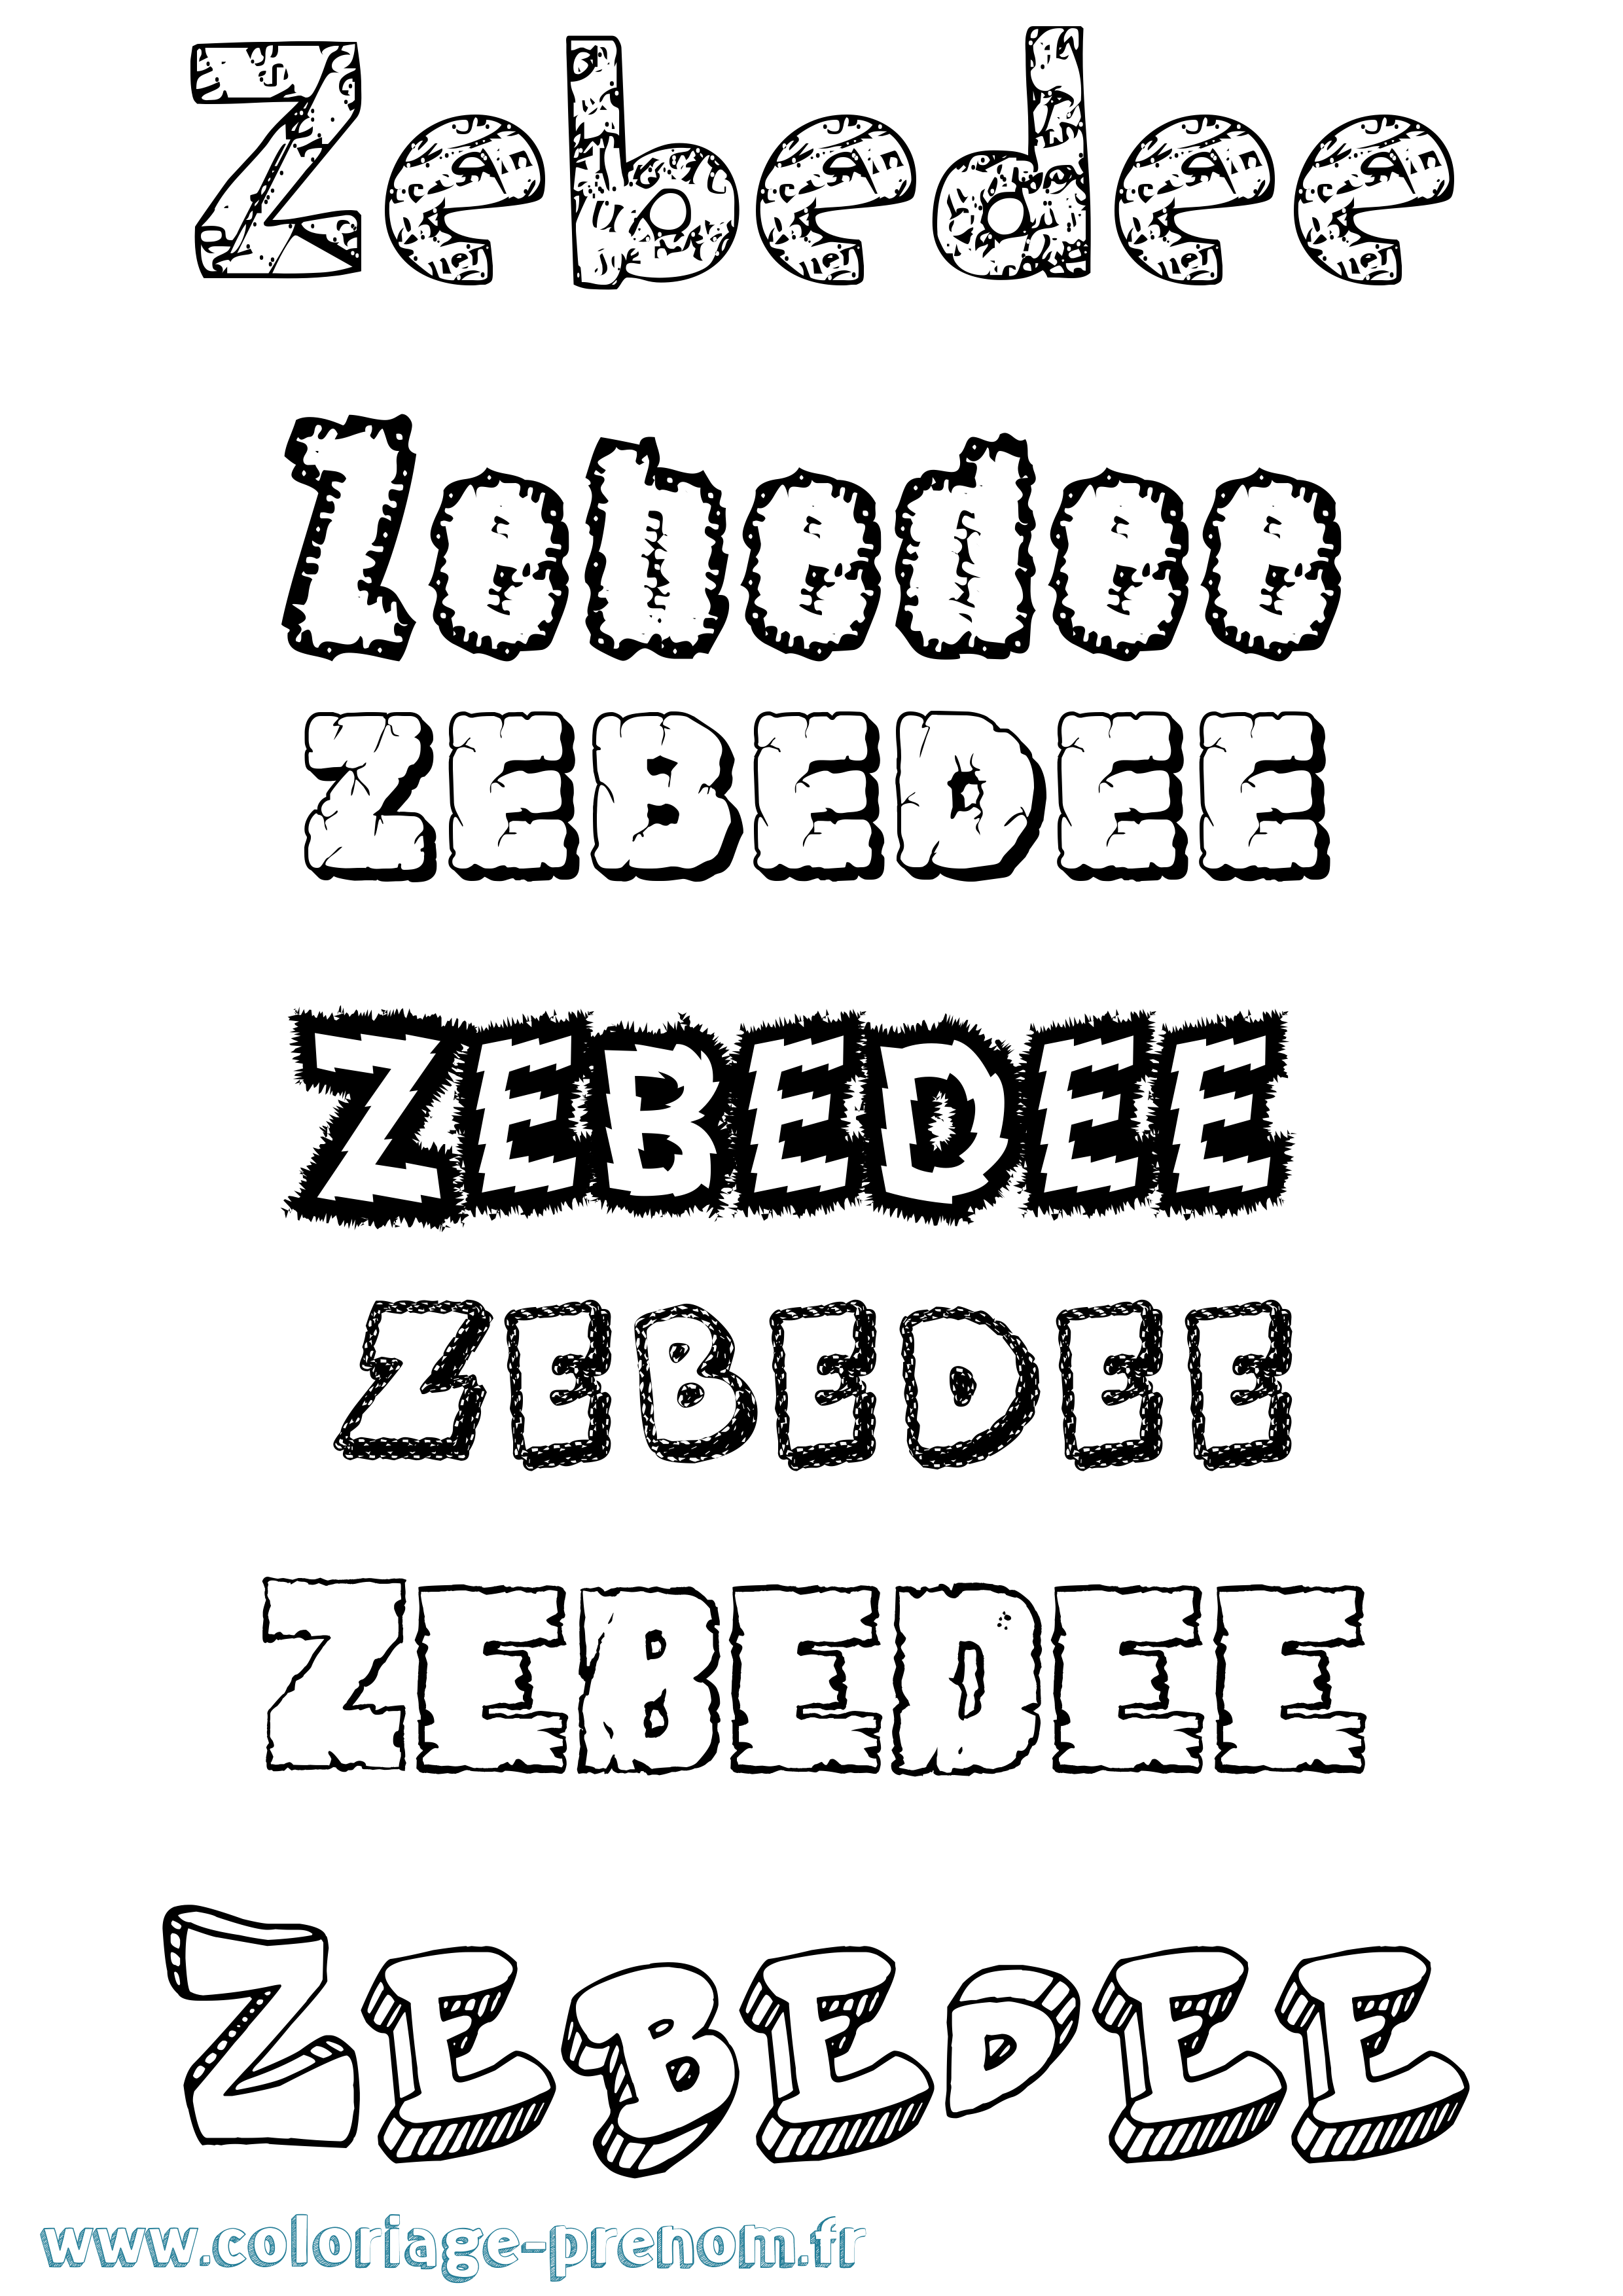 Coloriage prénom Zebedee Destructuré